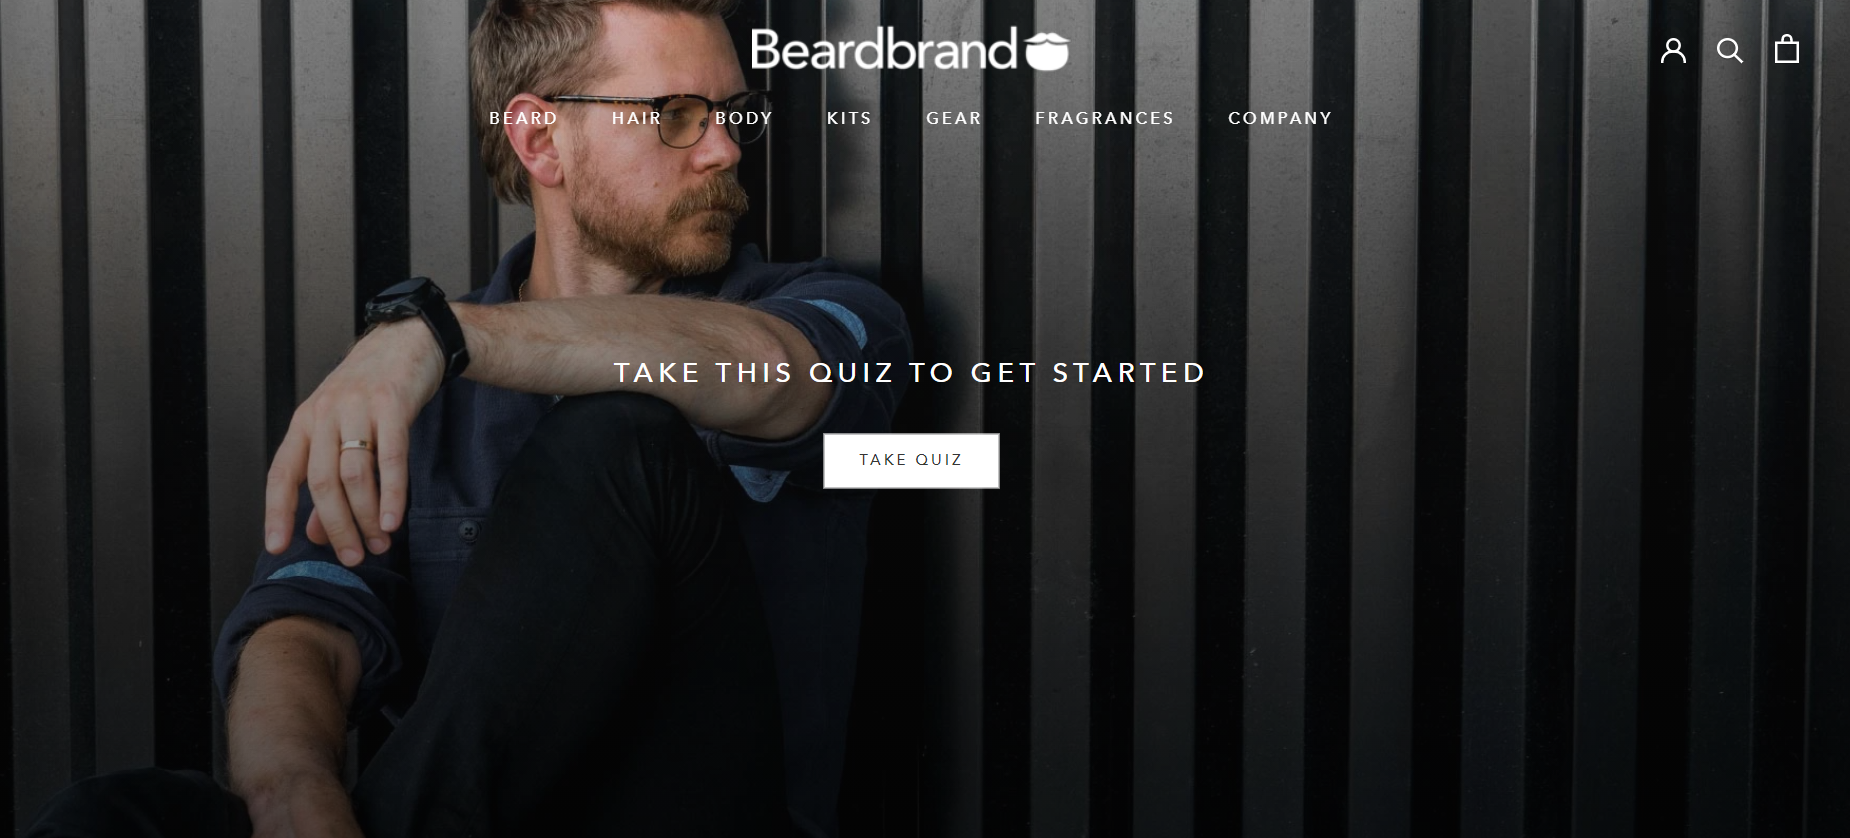 Beardbrand's online business page